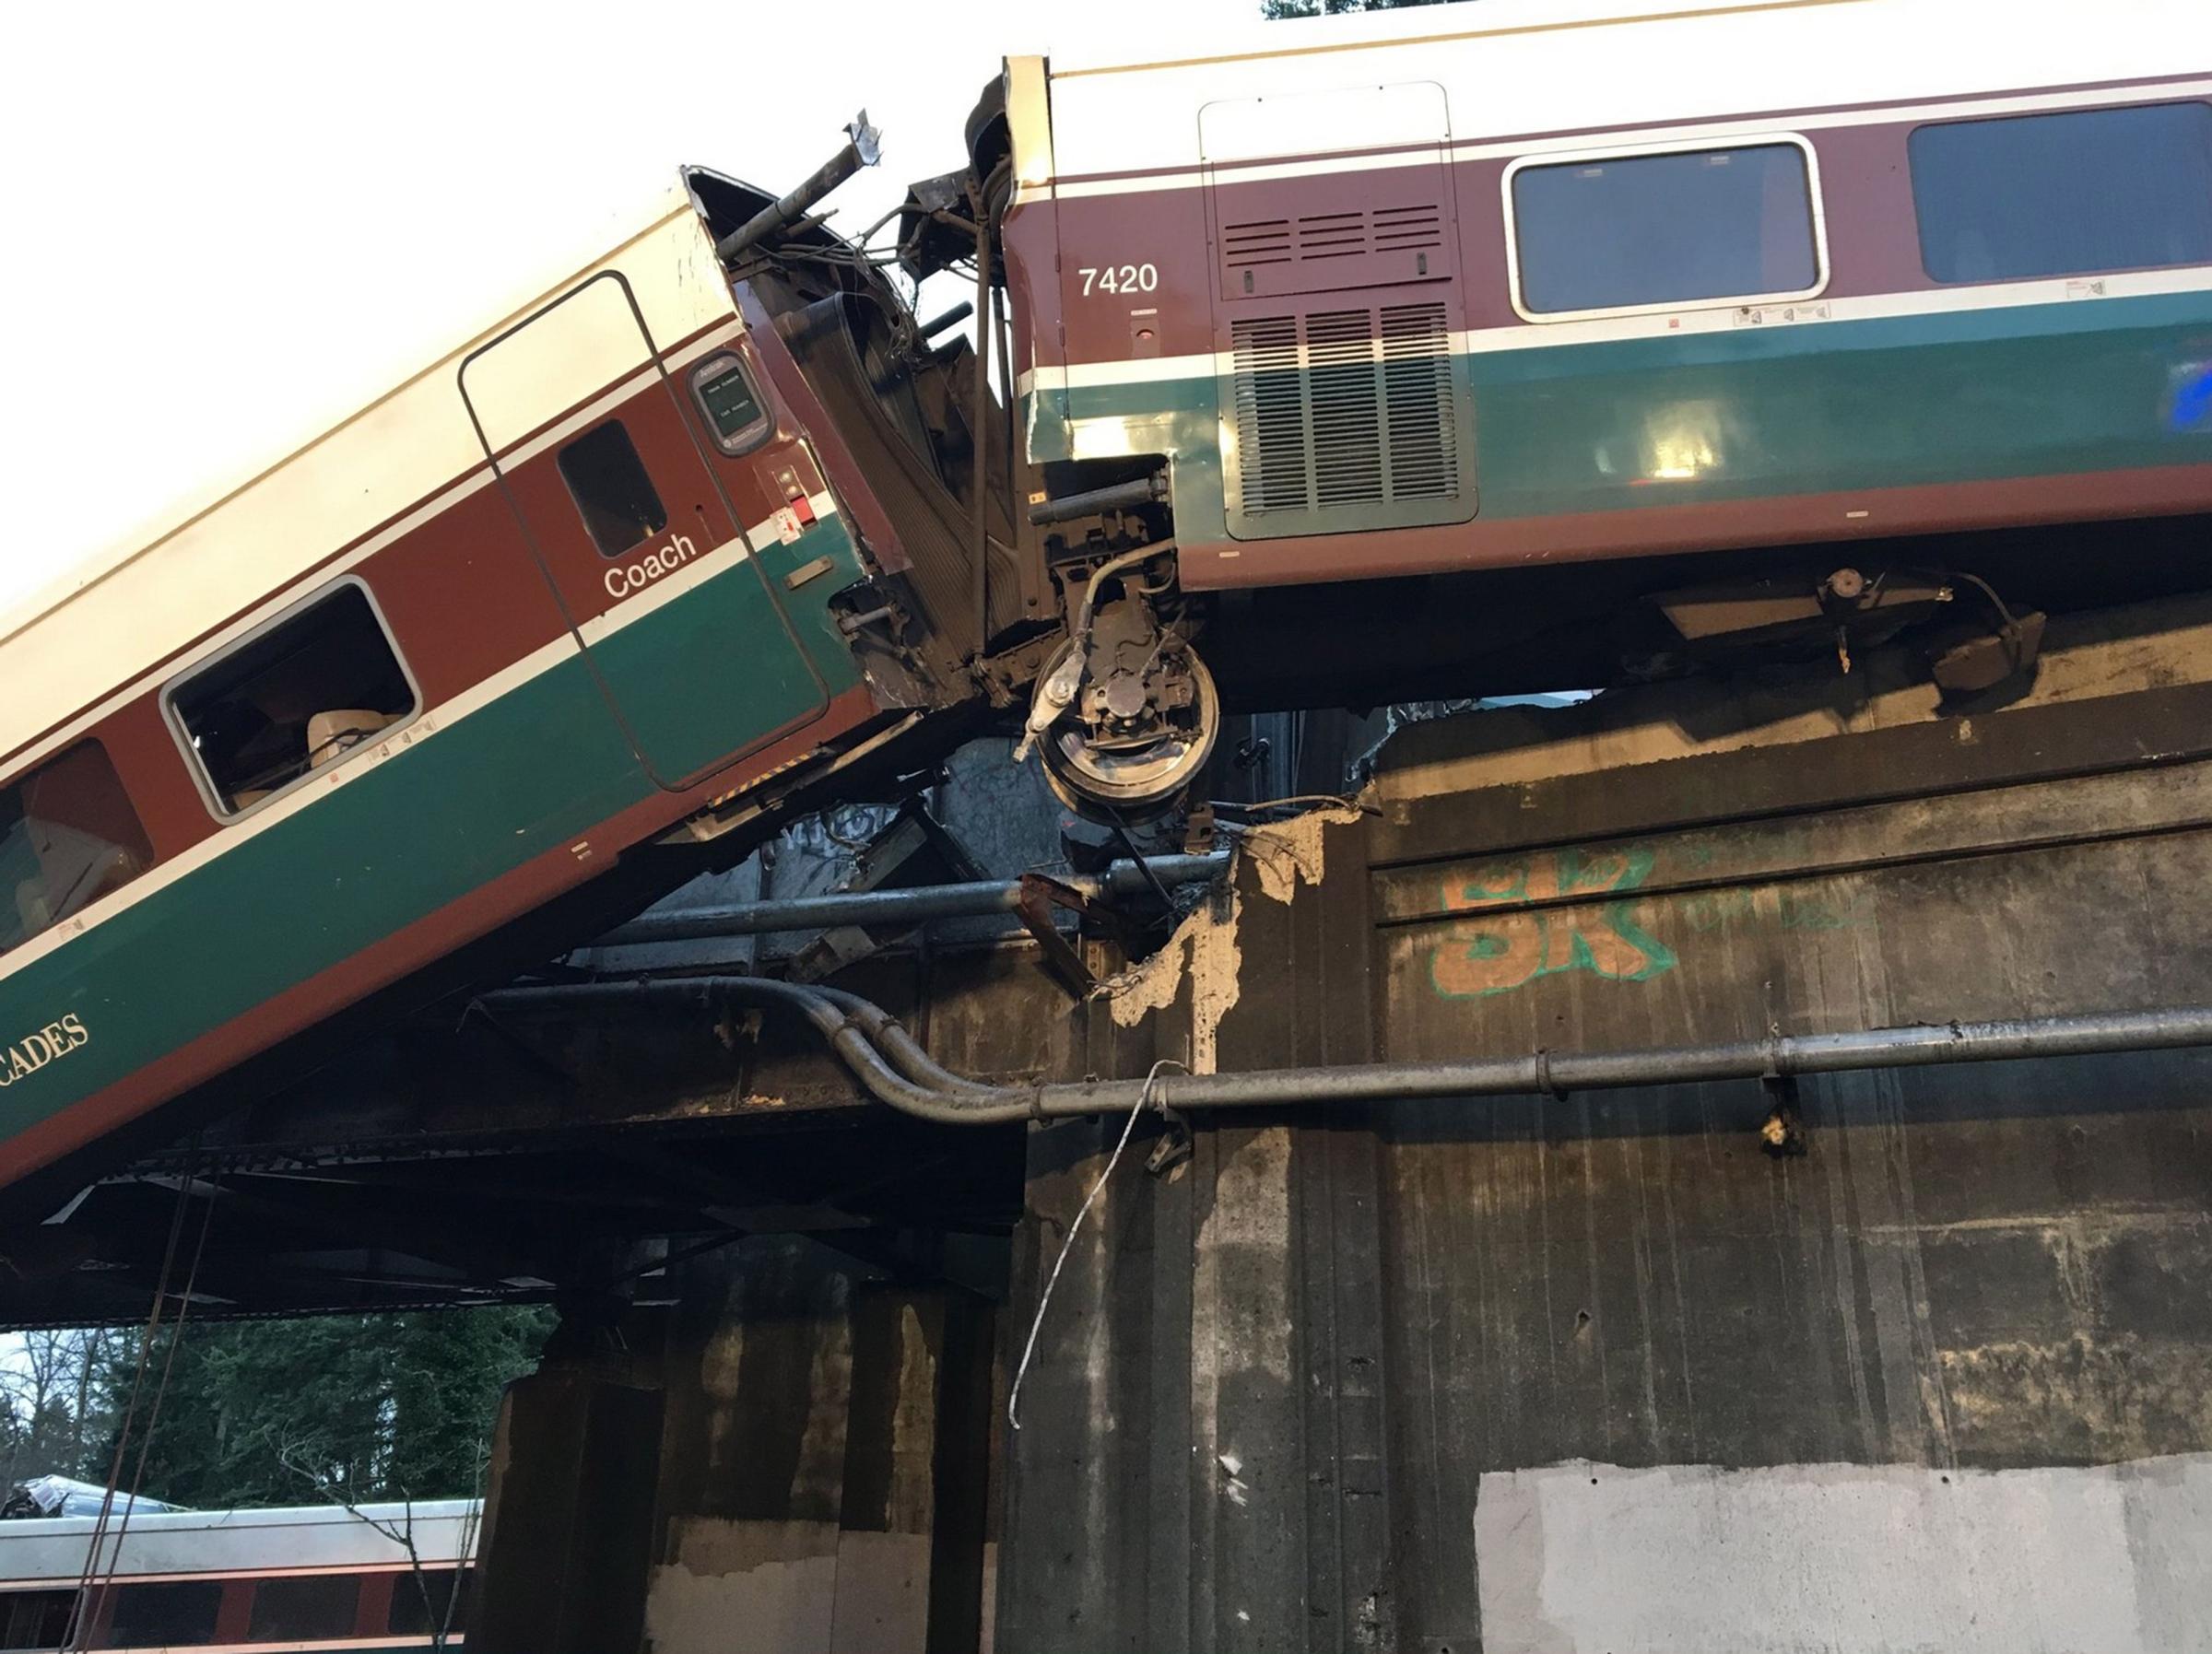 Amtrak train derails over highway, Olympia, USA - 18 Dec 2017